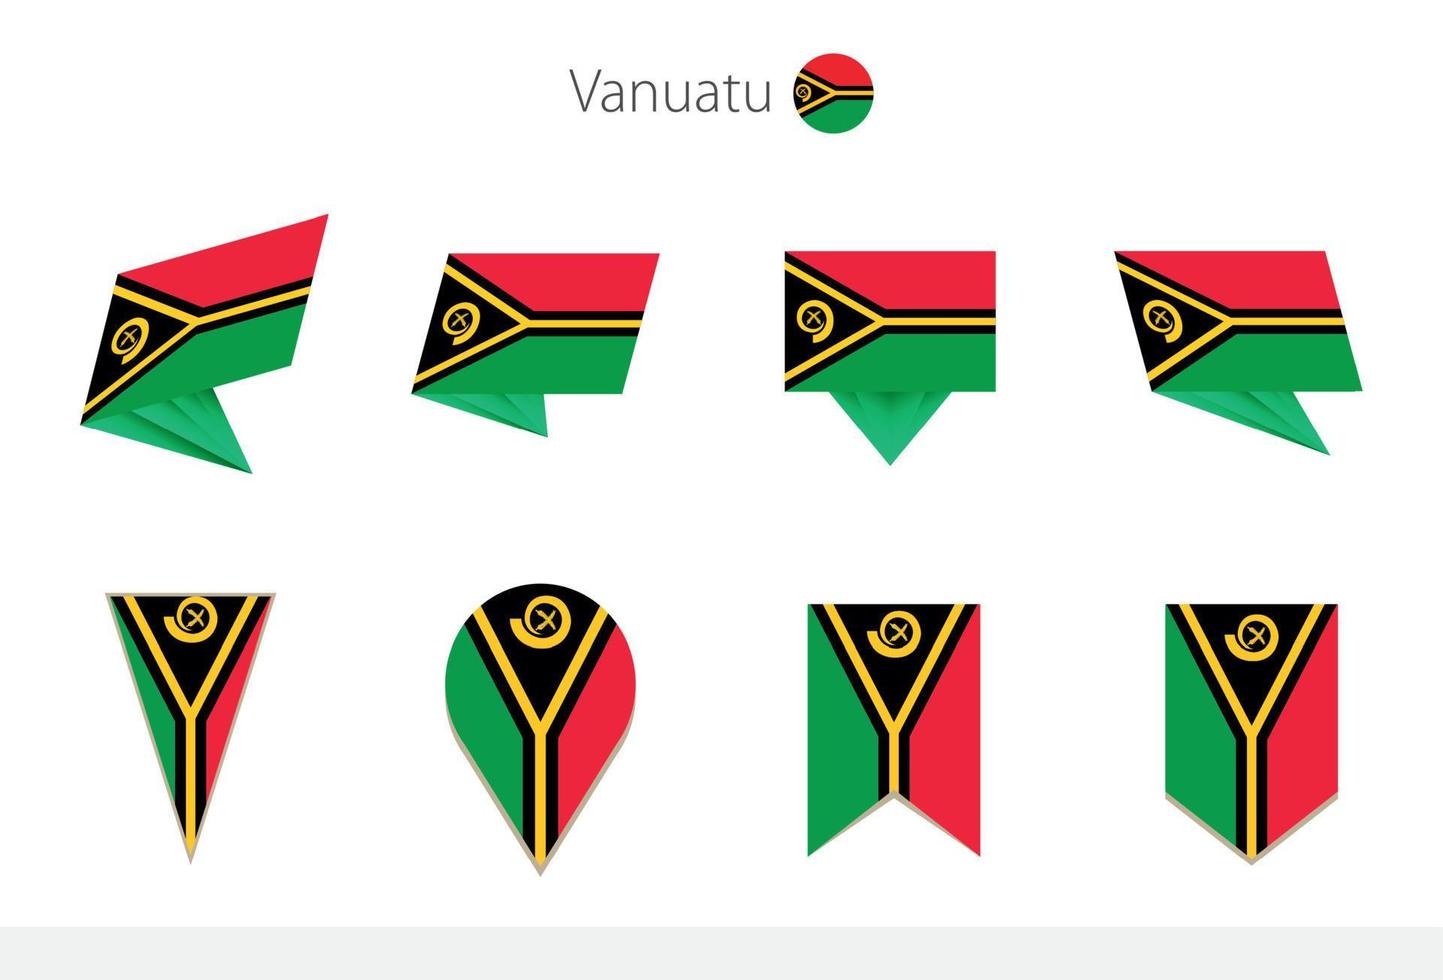 Vanuatu national flag collection, eight versions of Vanuatu vector flags.